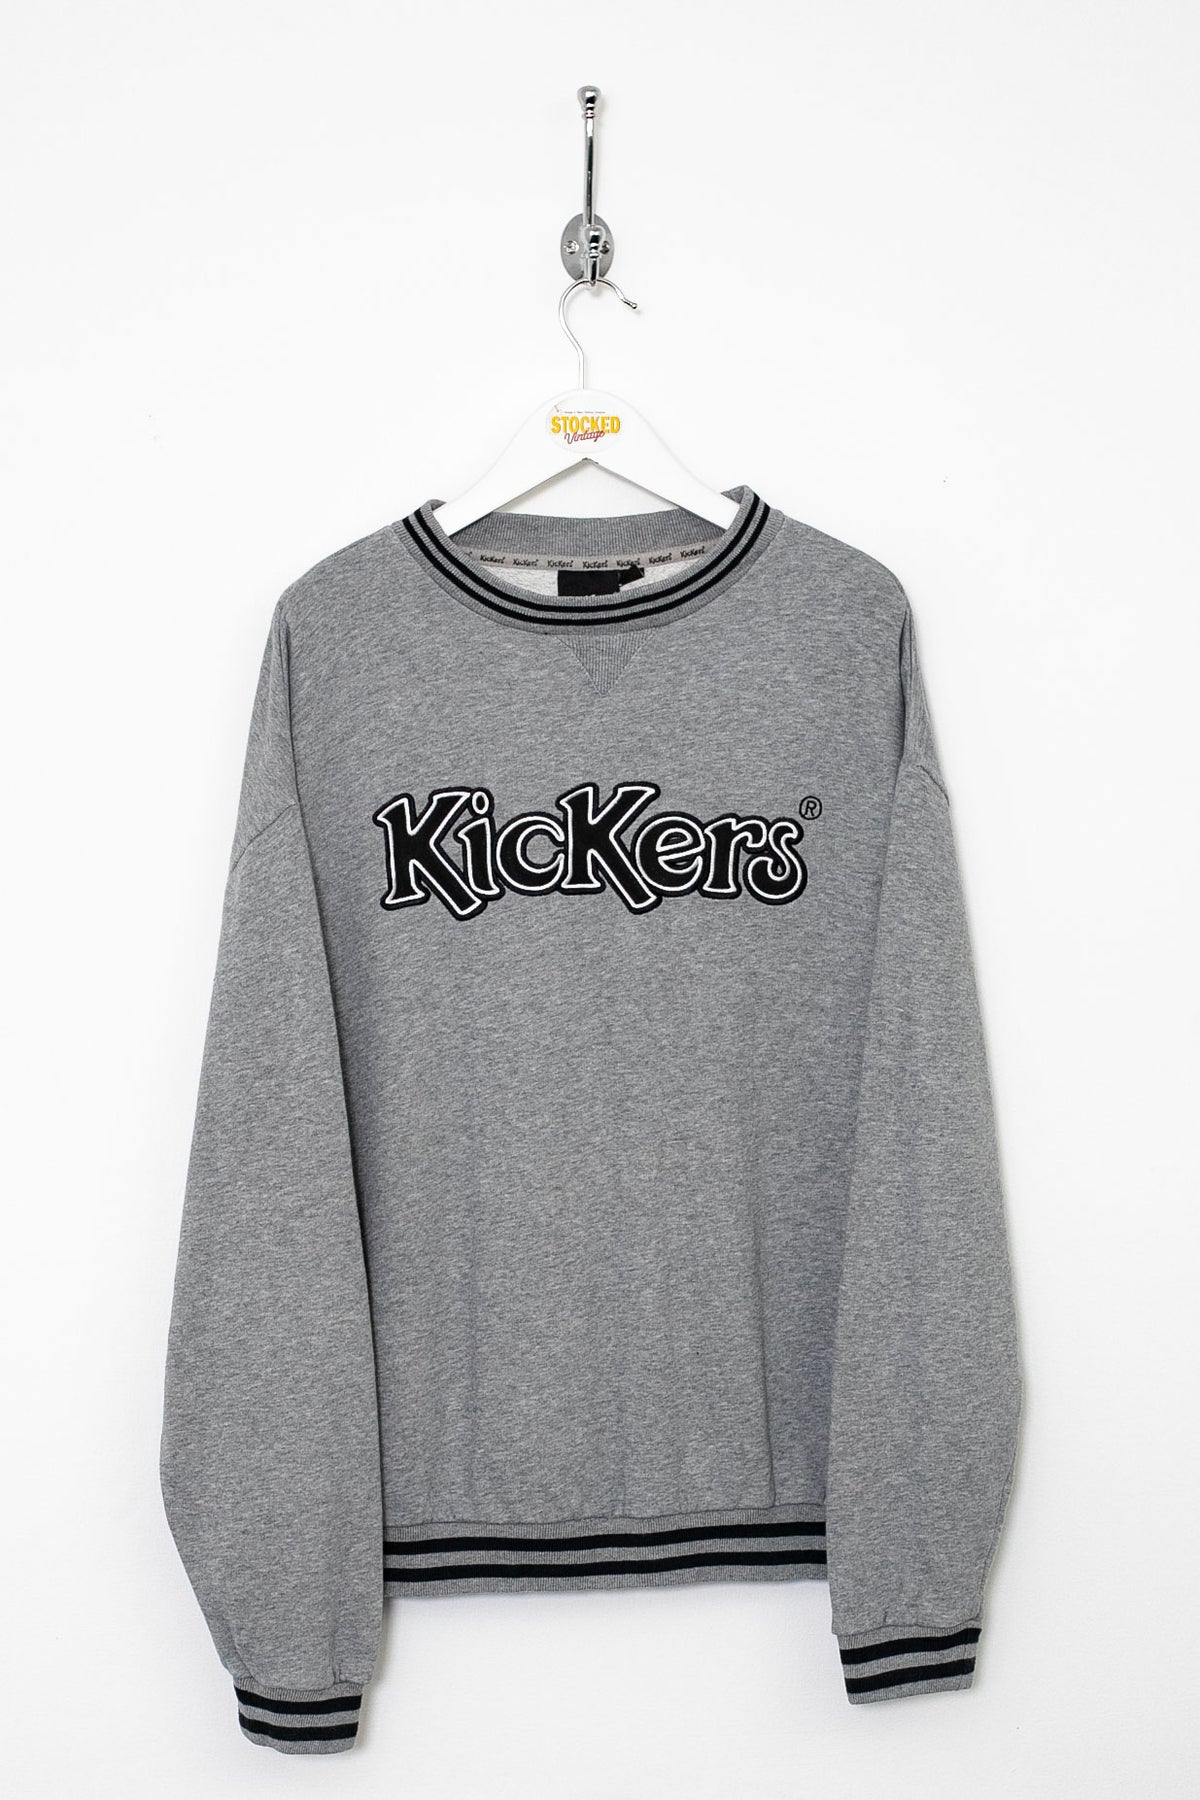 00s Kickers Sweatshirt (M)